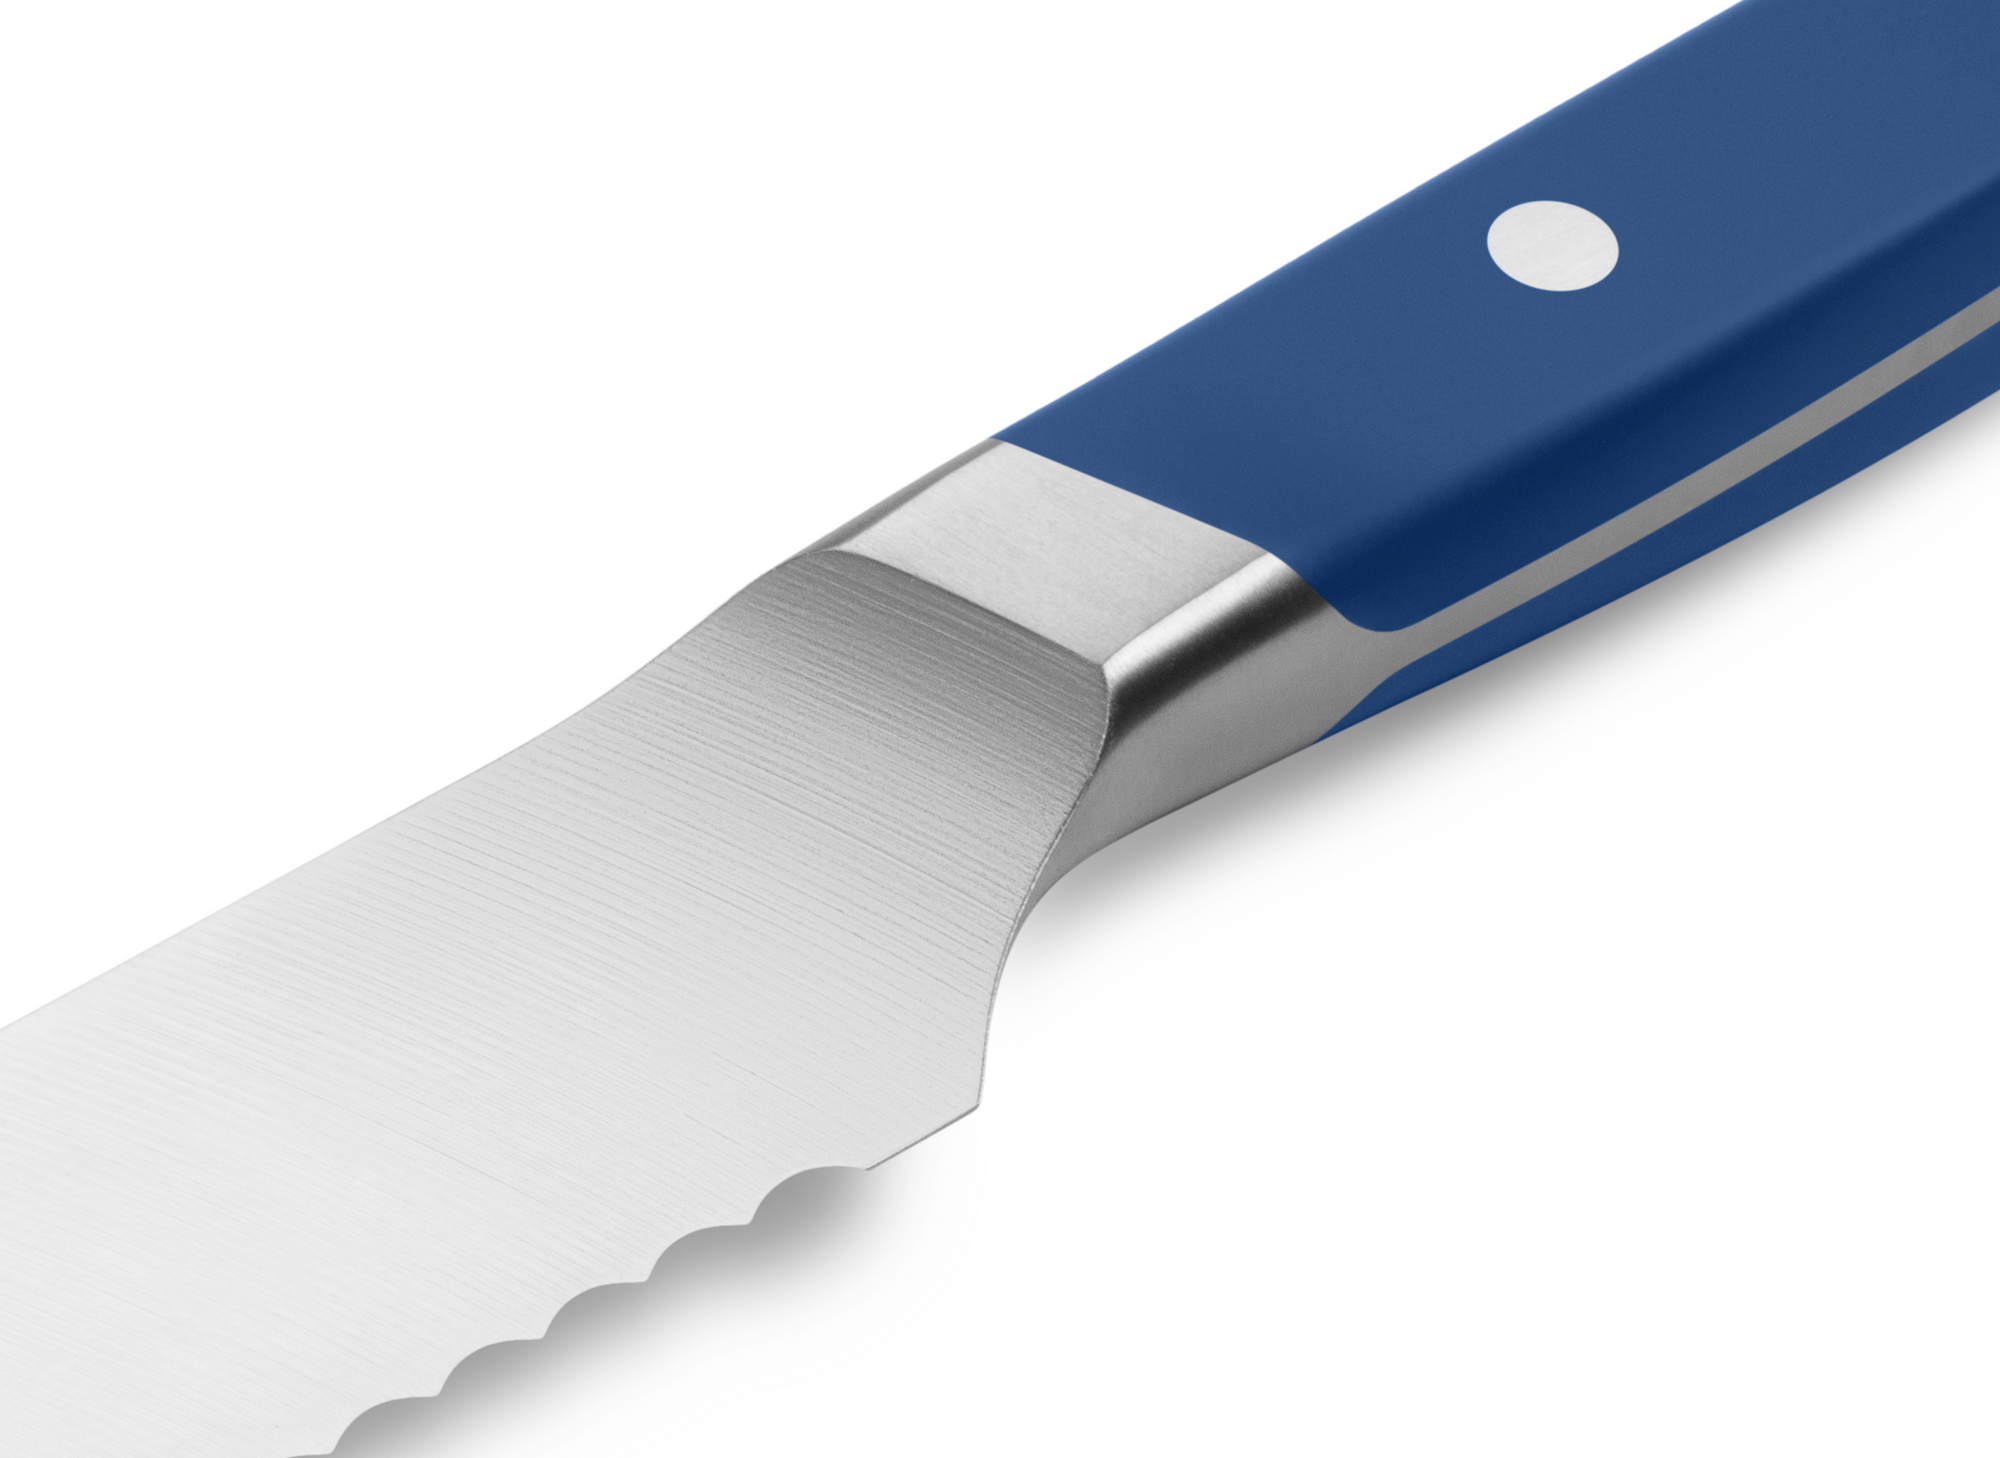 Linoroso 8 inch Bread Knife - MAKO Series